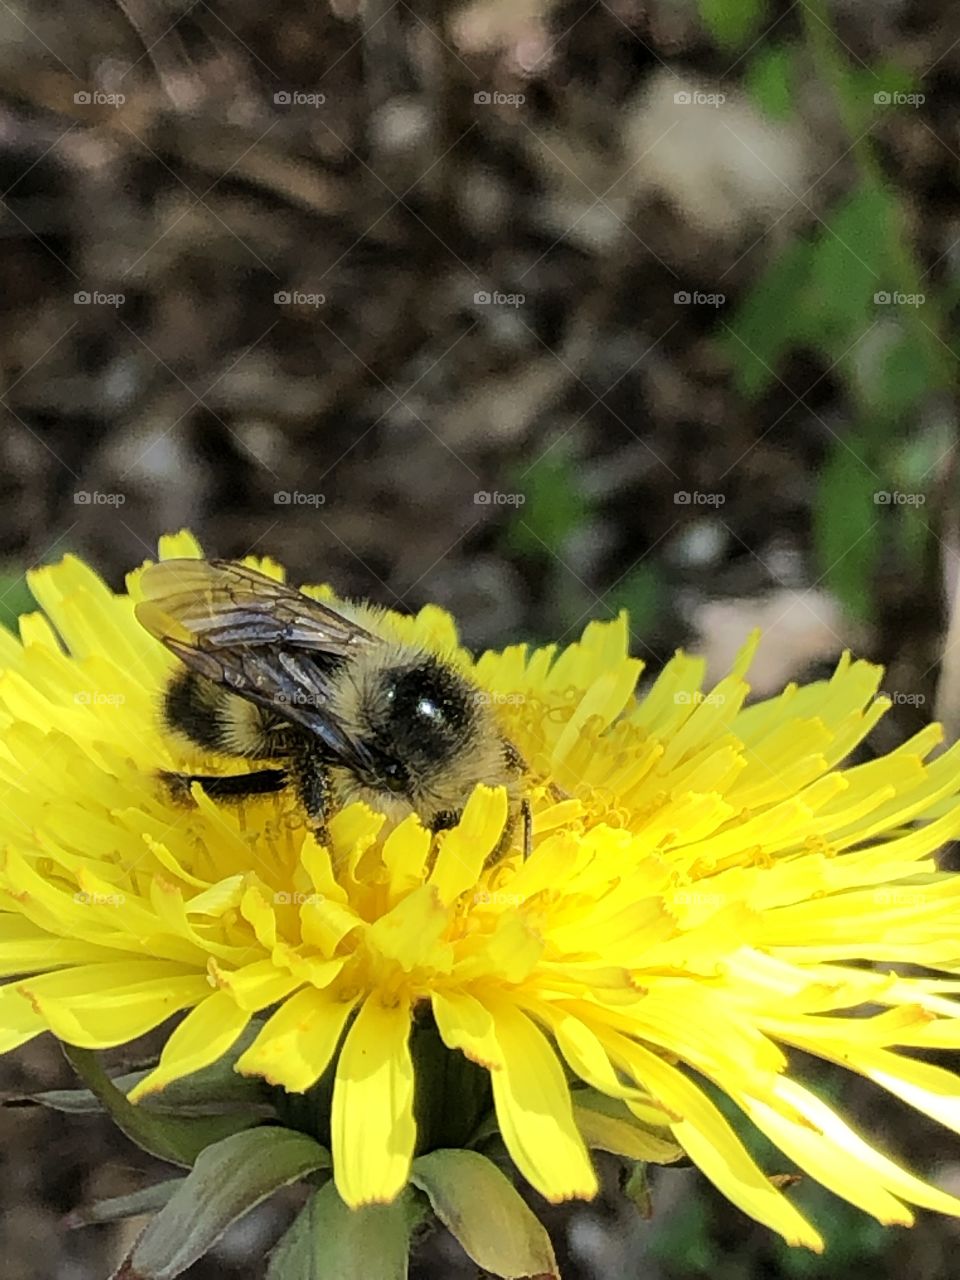 Bumble bee 